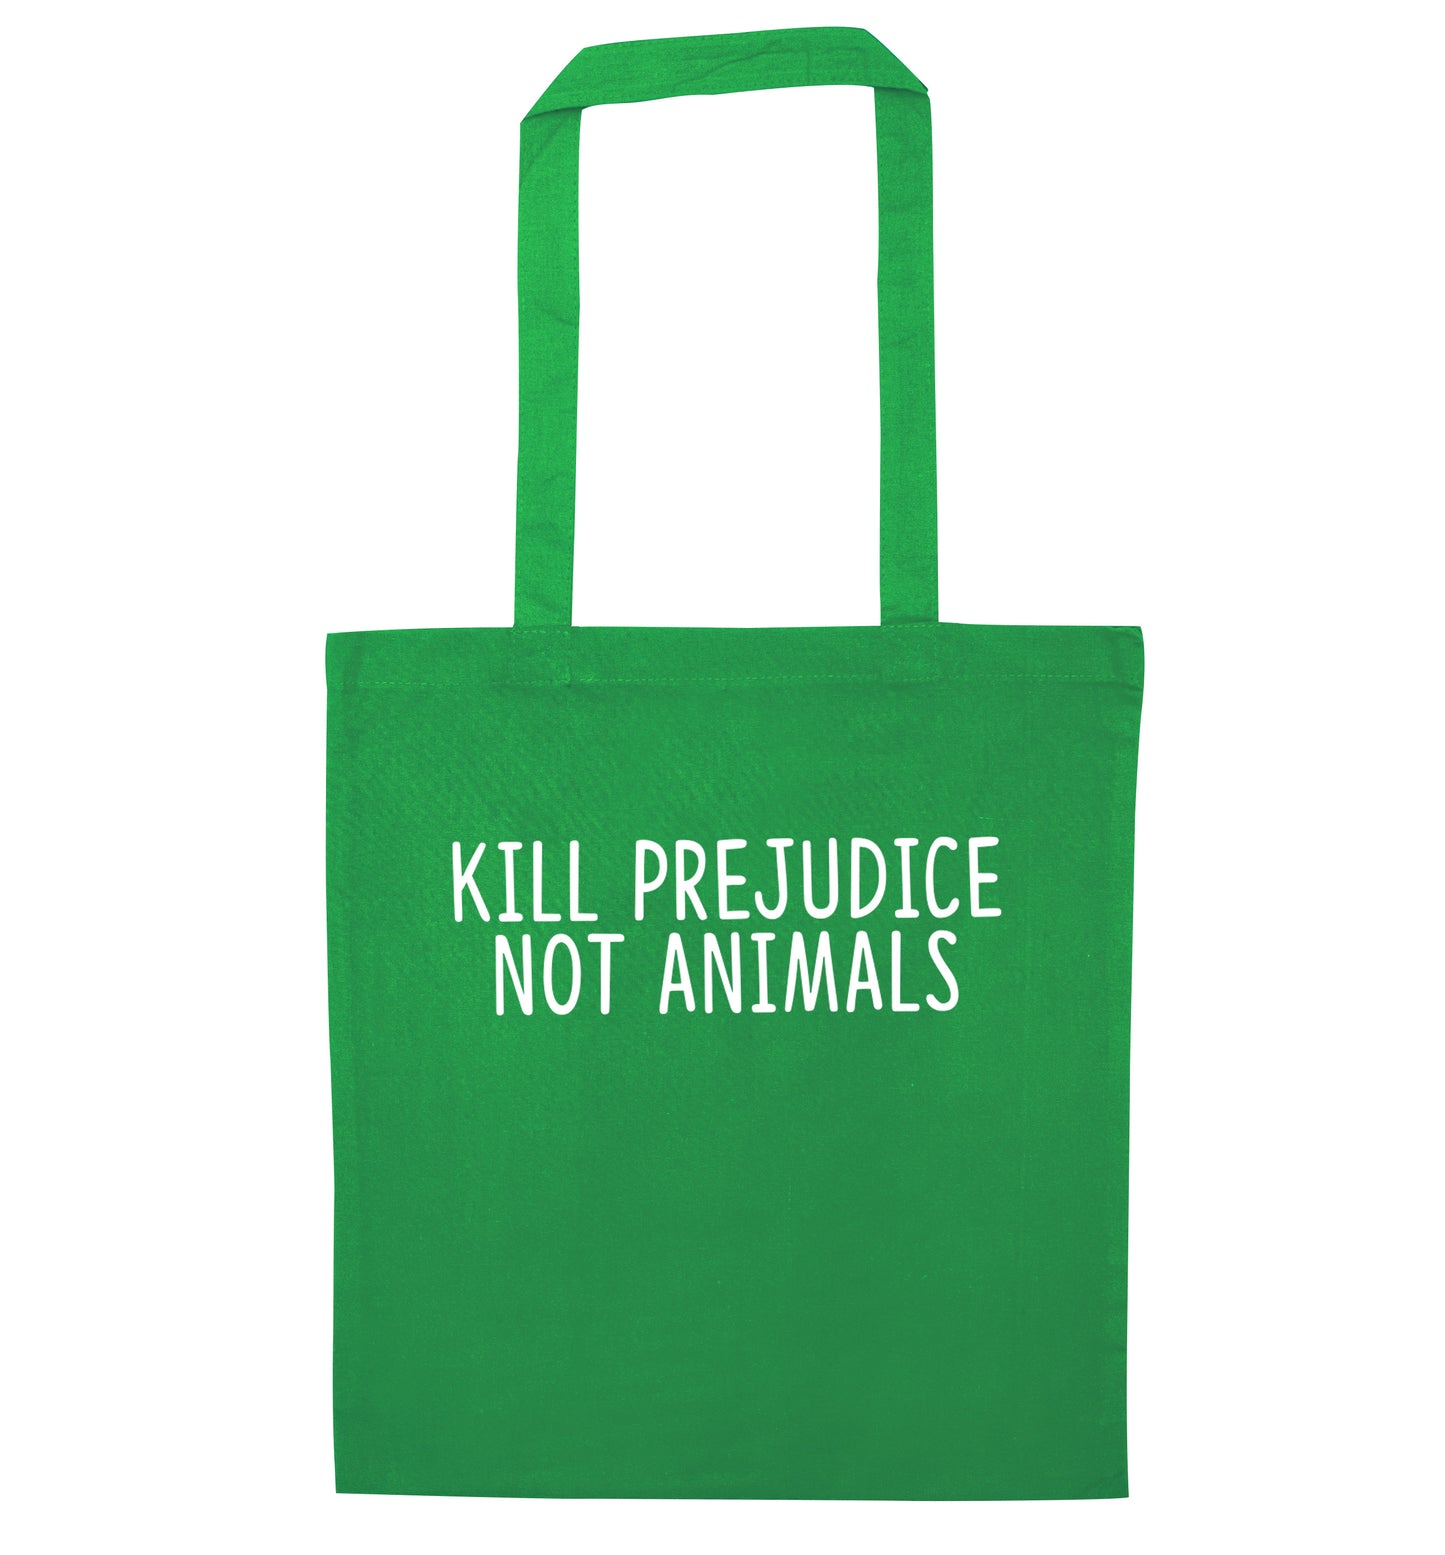 Kill Prejudice Not Animals green tote bag